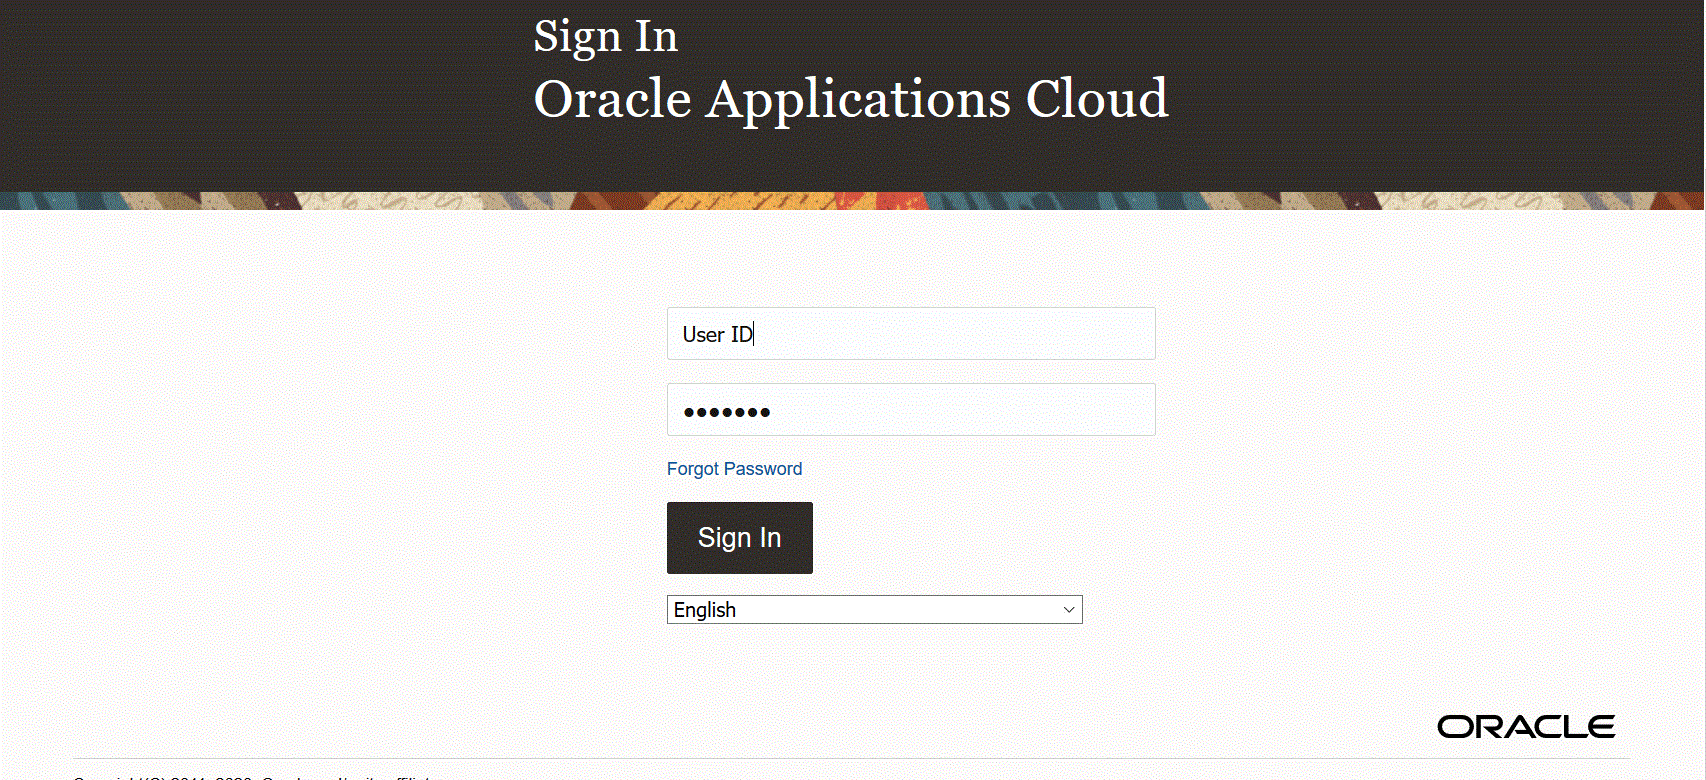 影像顯示 Oracle Applications Cloud